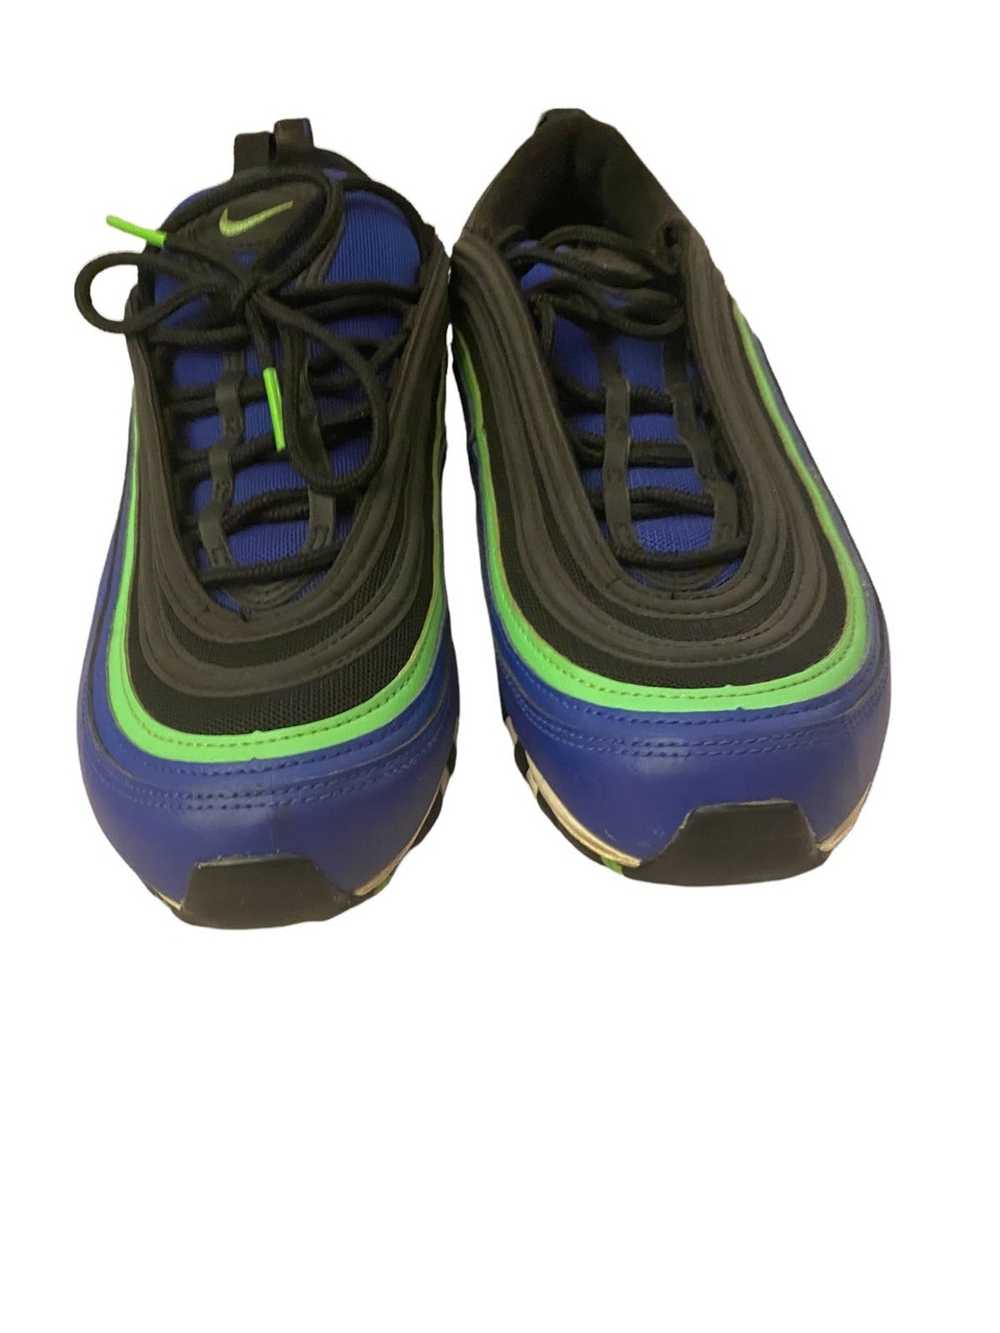 Nike Nike Airmax 97 Royal Blue Neon - image 5